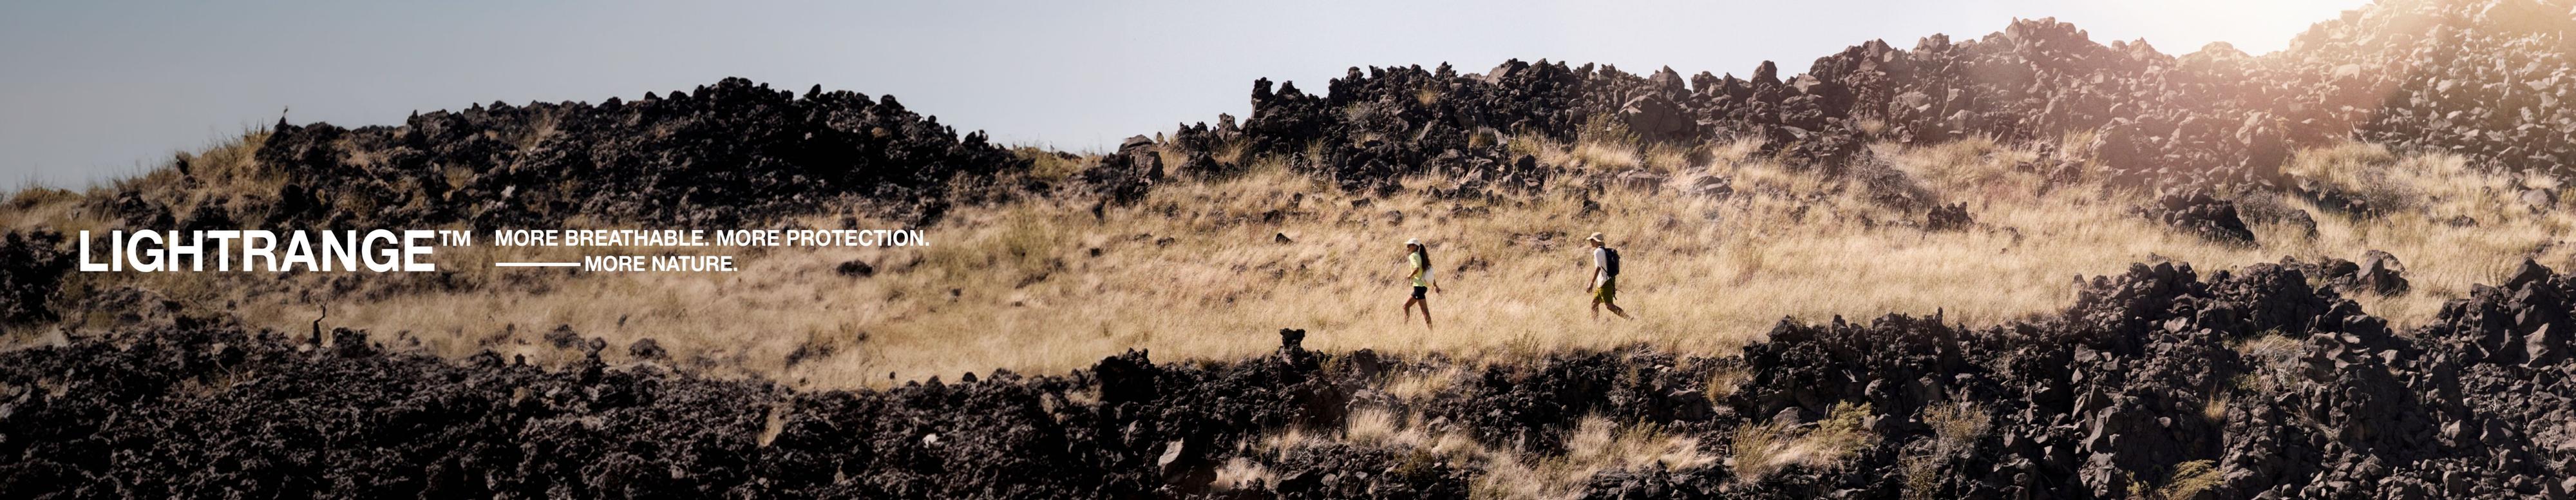 Two distant hikers trek through a desert landscape. 